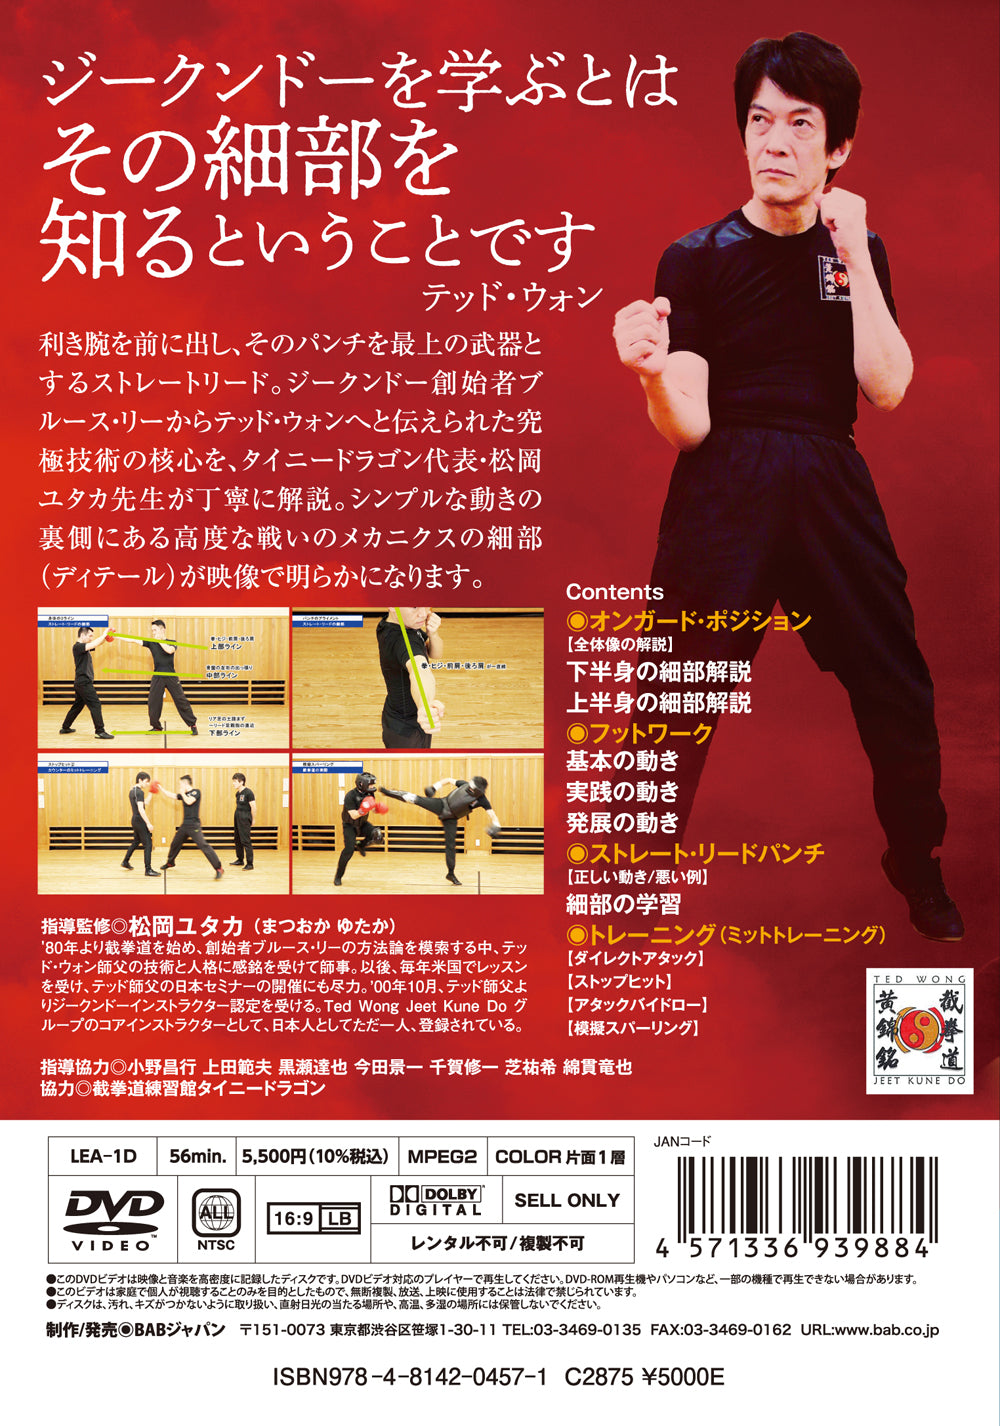 Golpe principal recto del DVD Jeet Kune Do de Yutaka Matsuoka